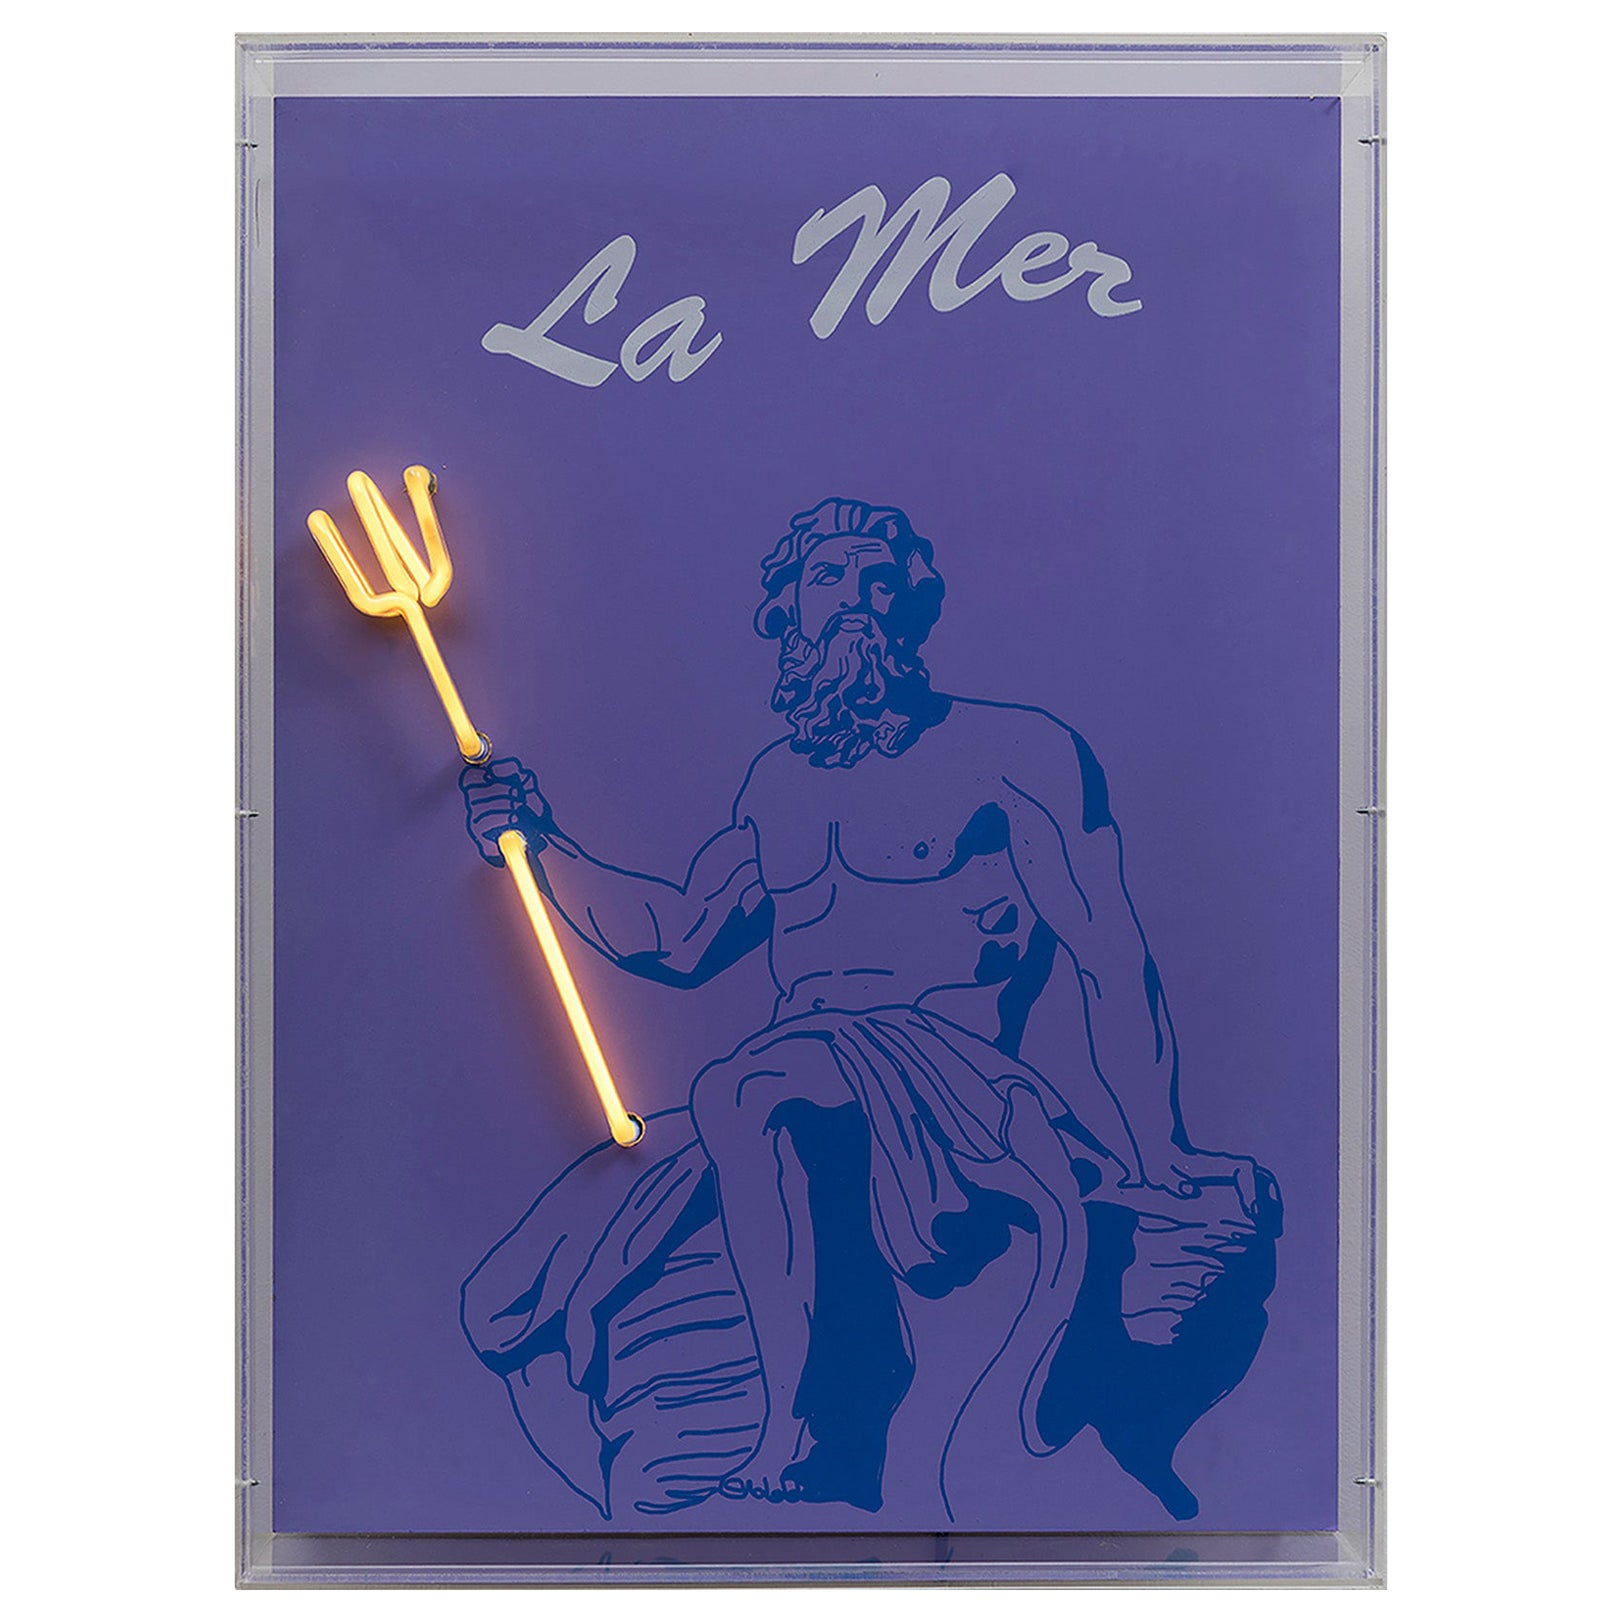 La Mer Poseidon. Neon Light Box Wall Sculpture. From the series Neon Classics For Sale